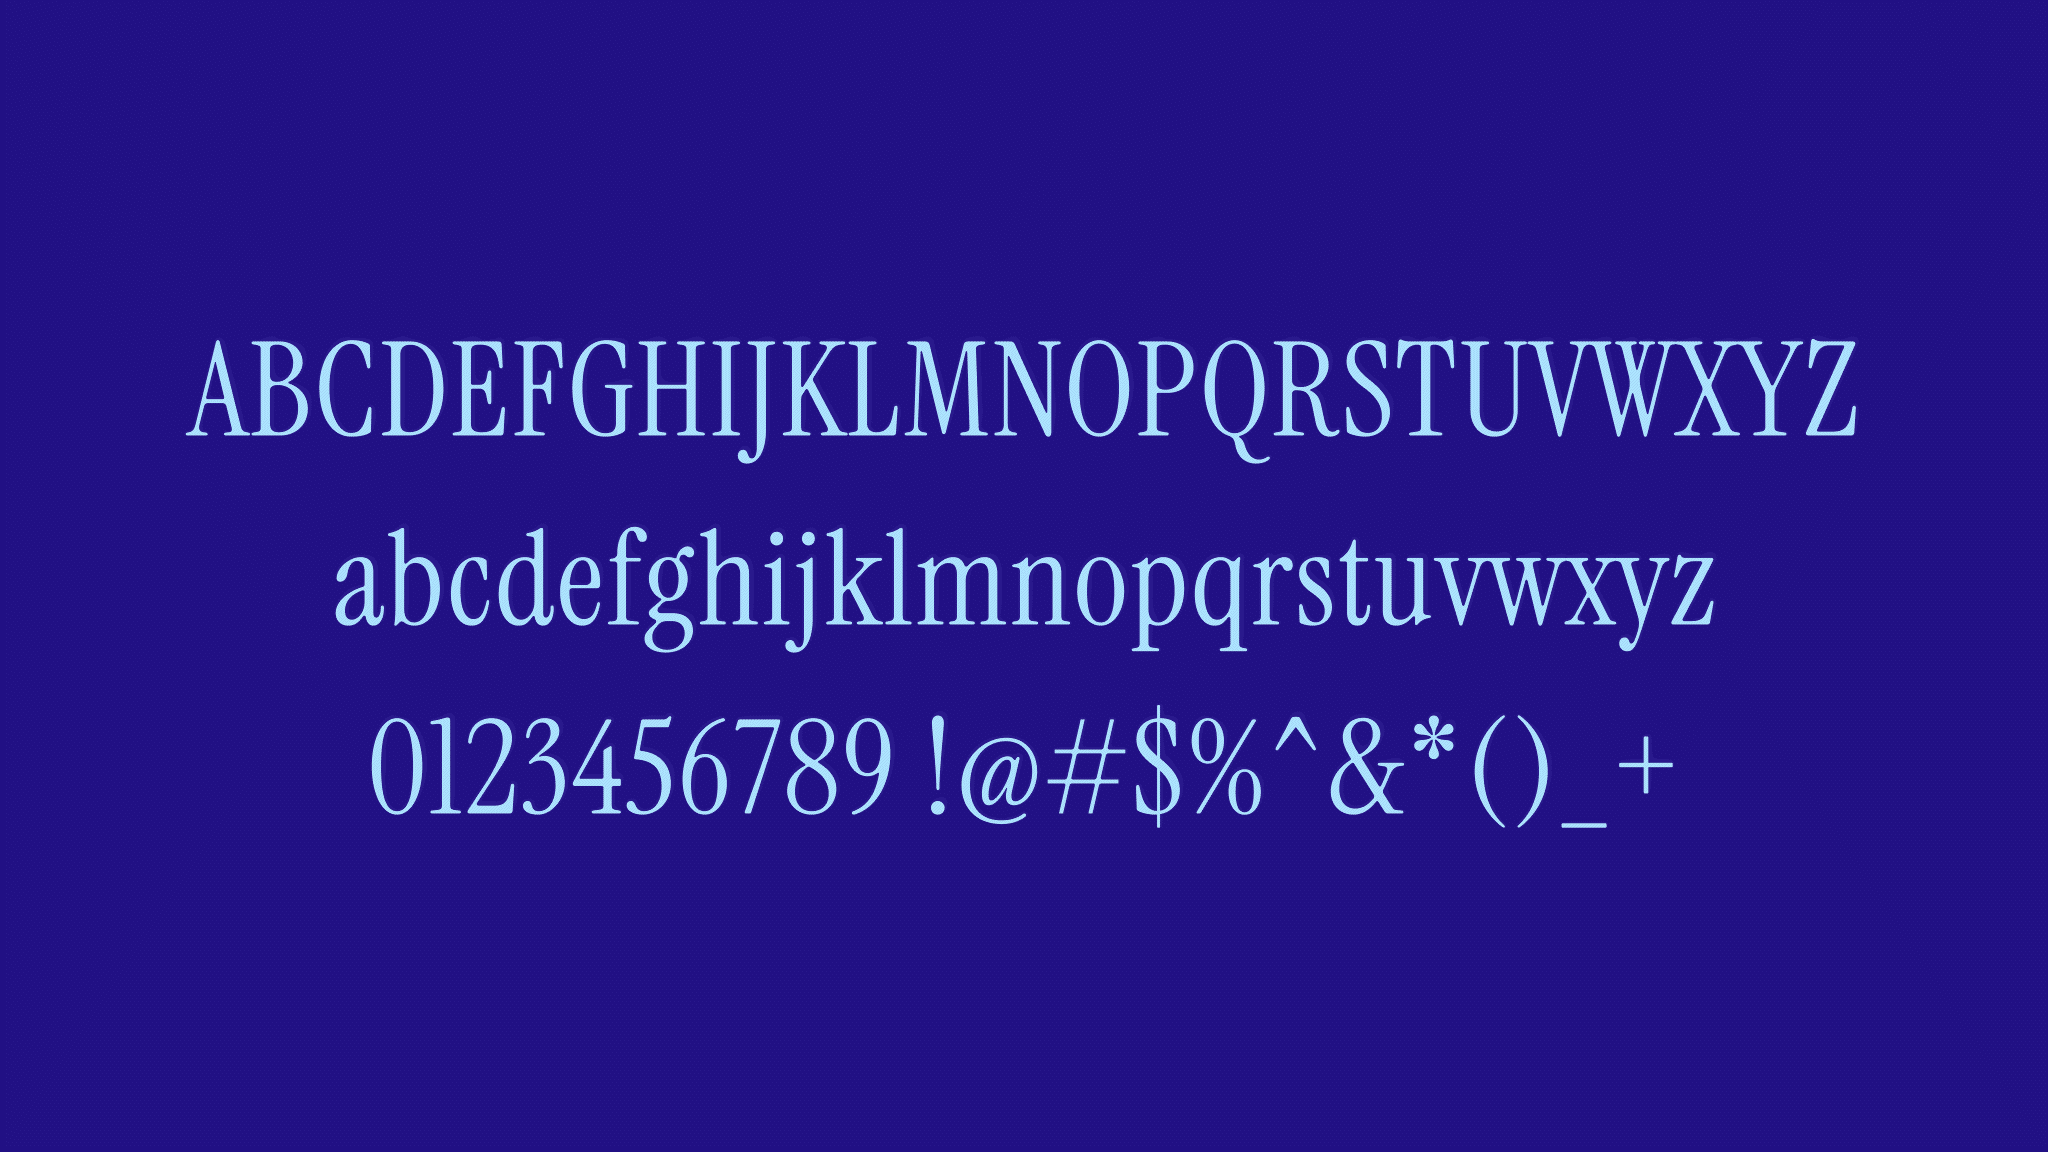 
Animated gif.
Specimens of Instrument Serif, regular and italic, light blue text on blue background.